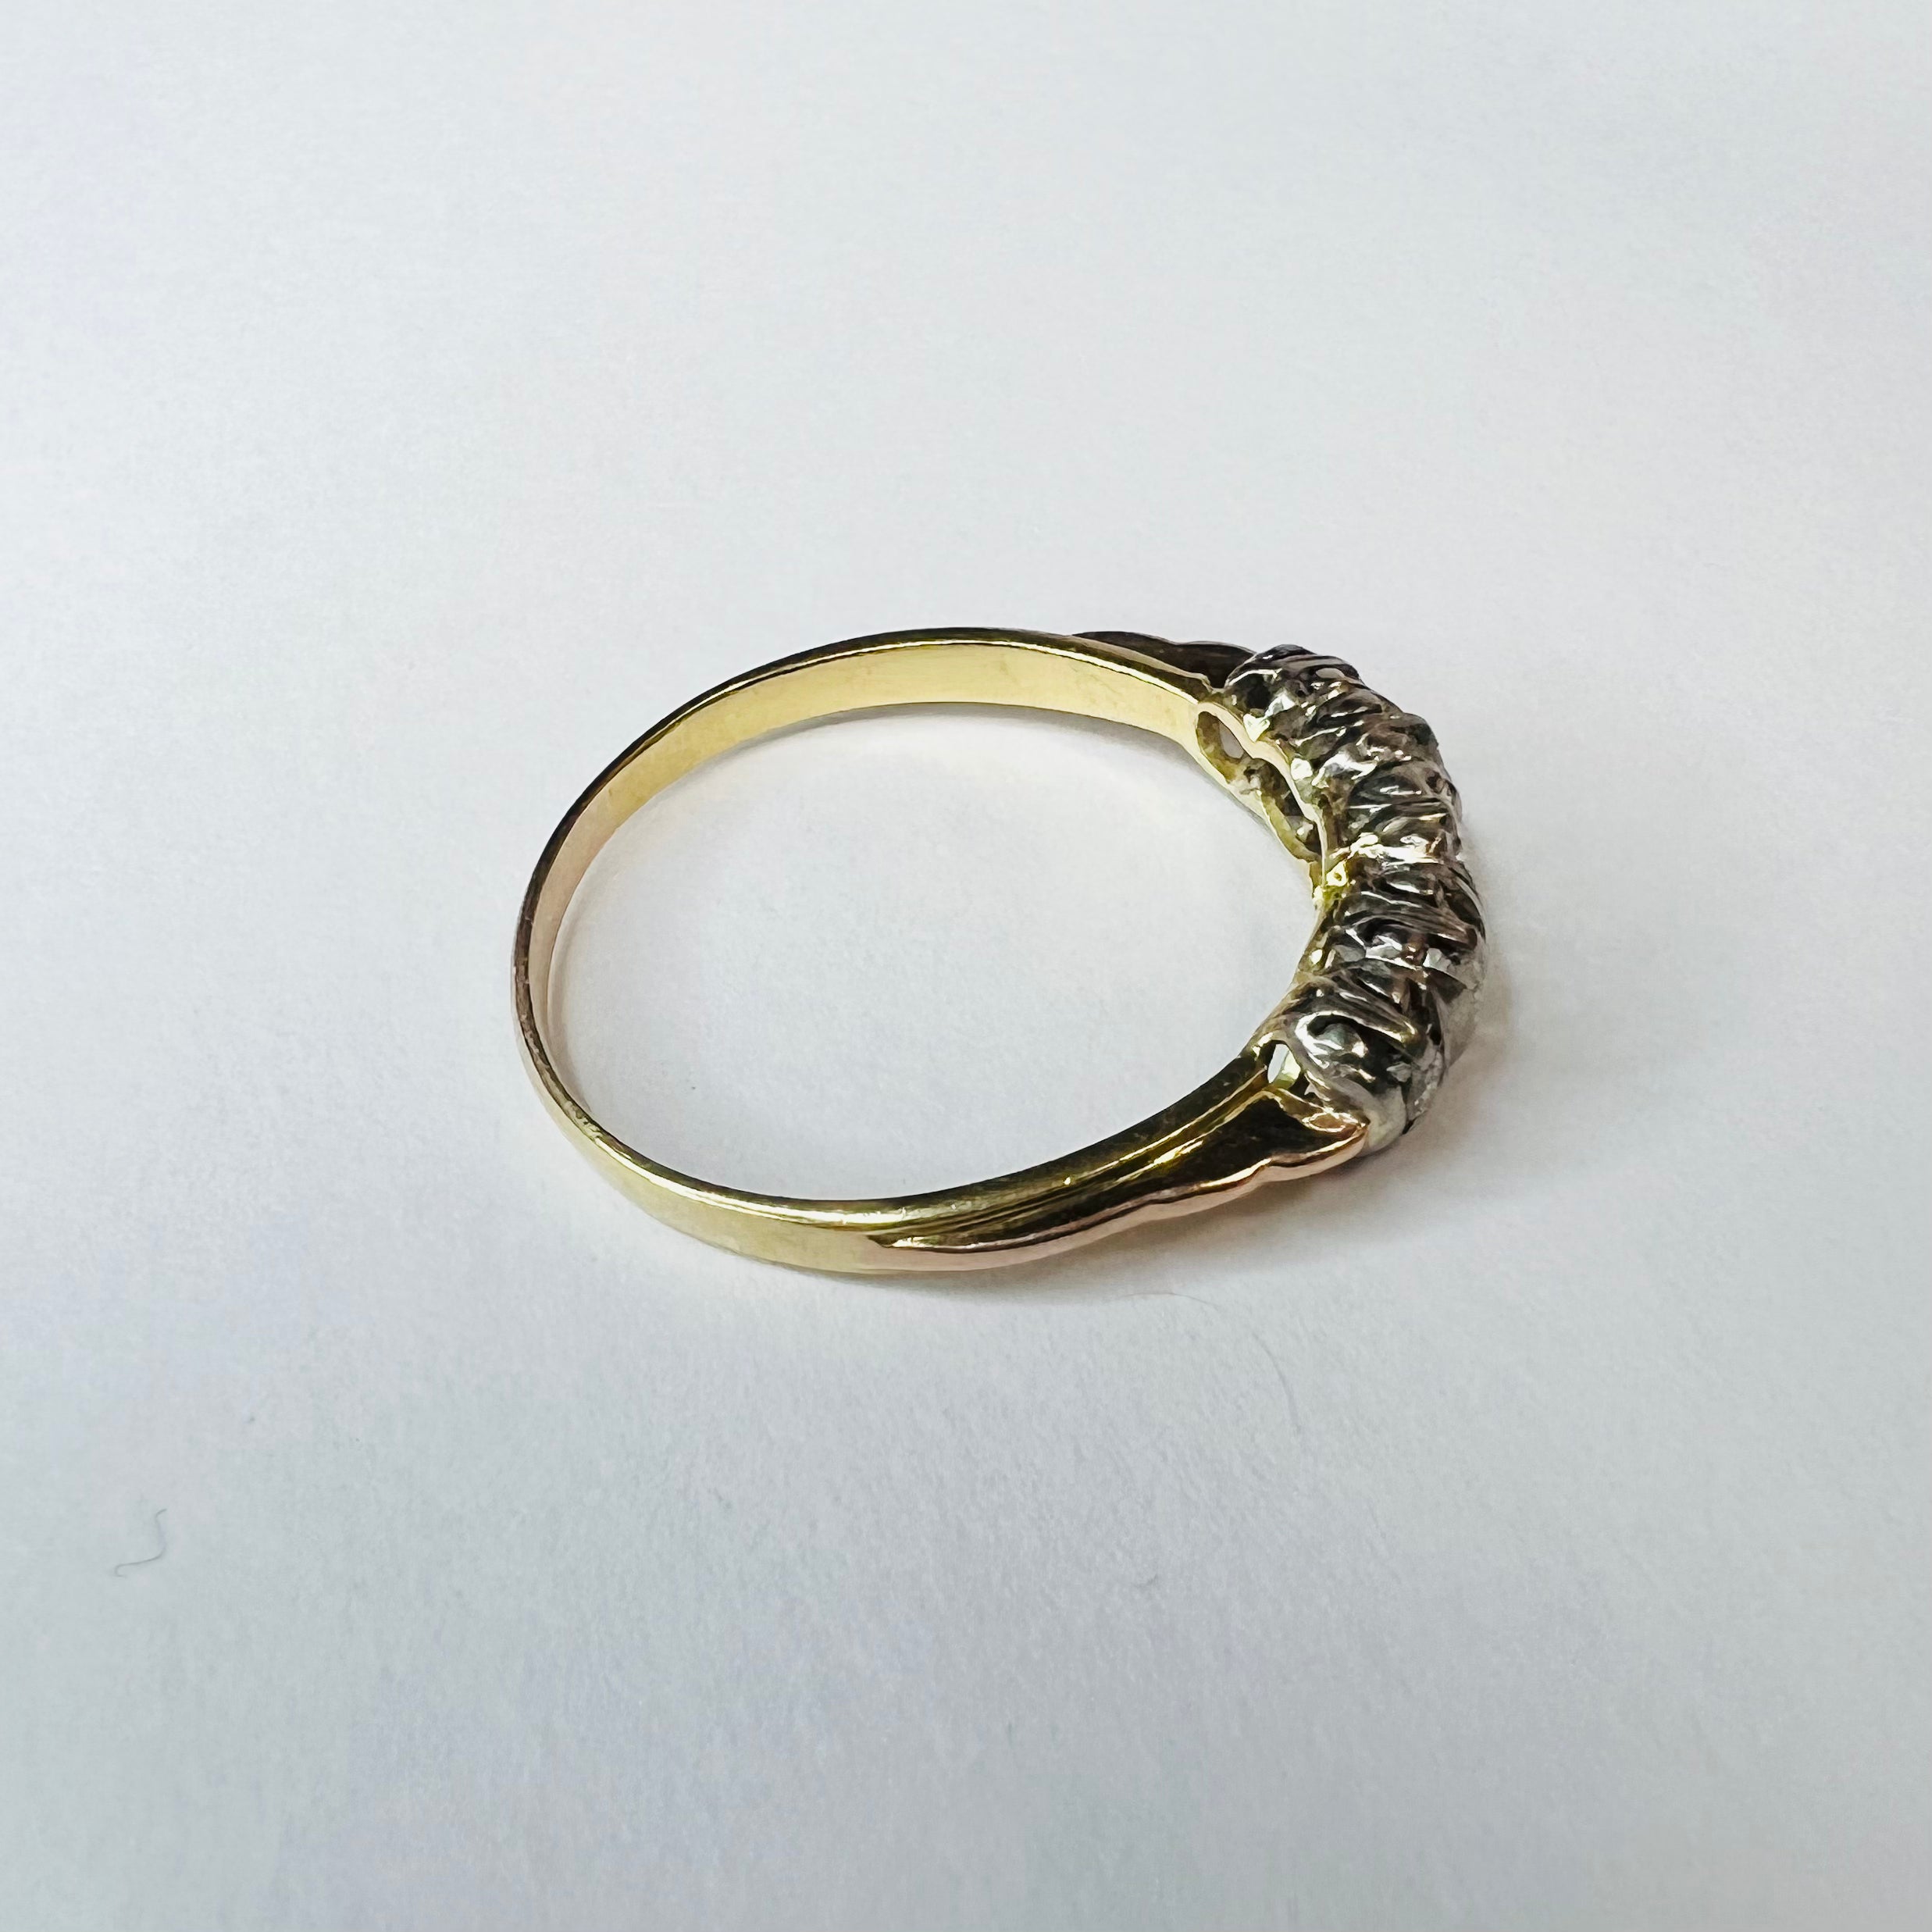 Antique 14K Yellow Gold .22ctw Diamond Ring Size 6.25